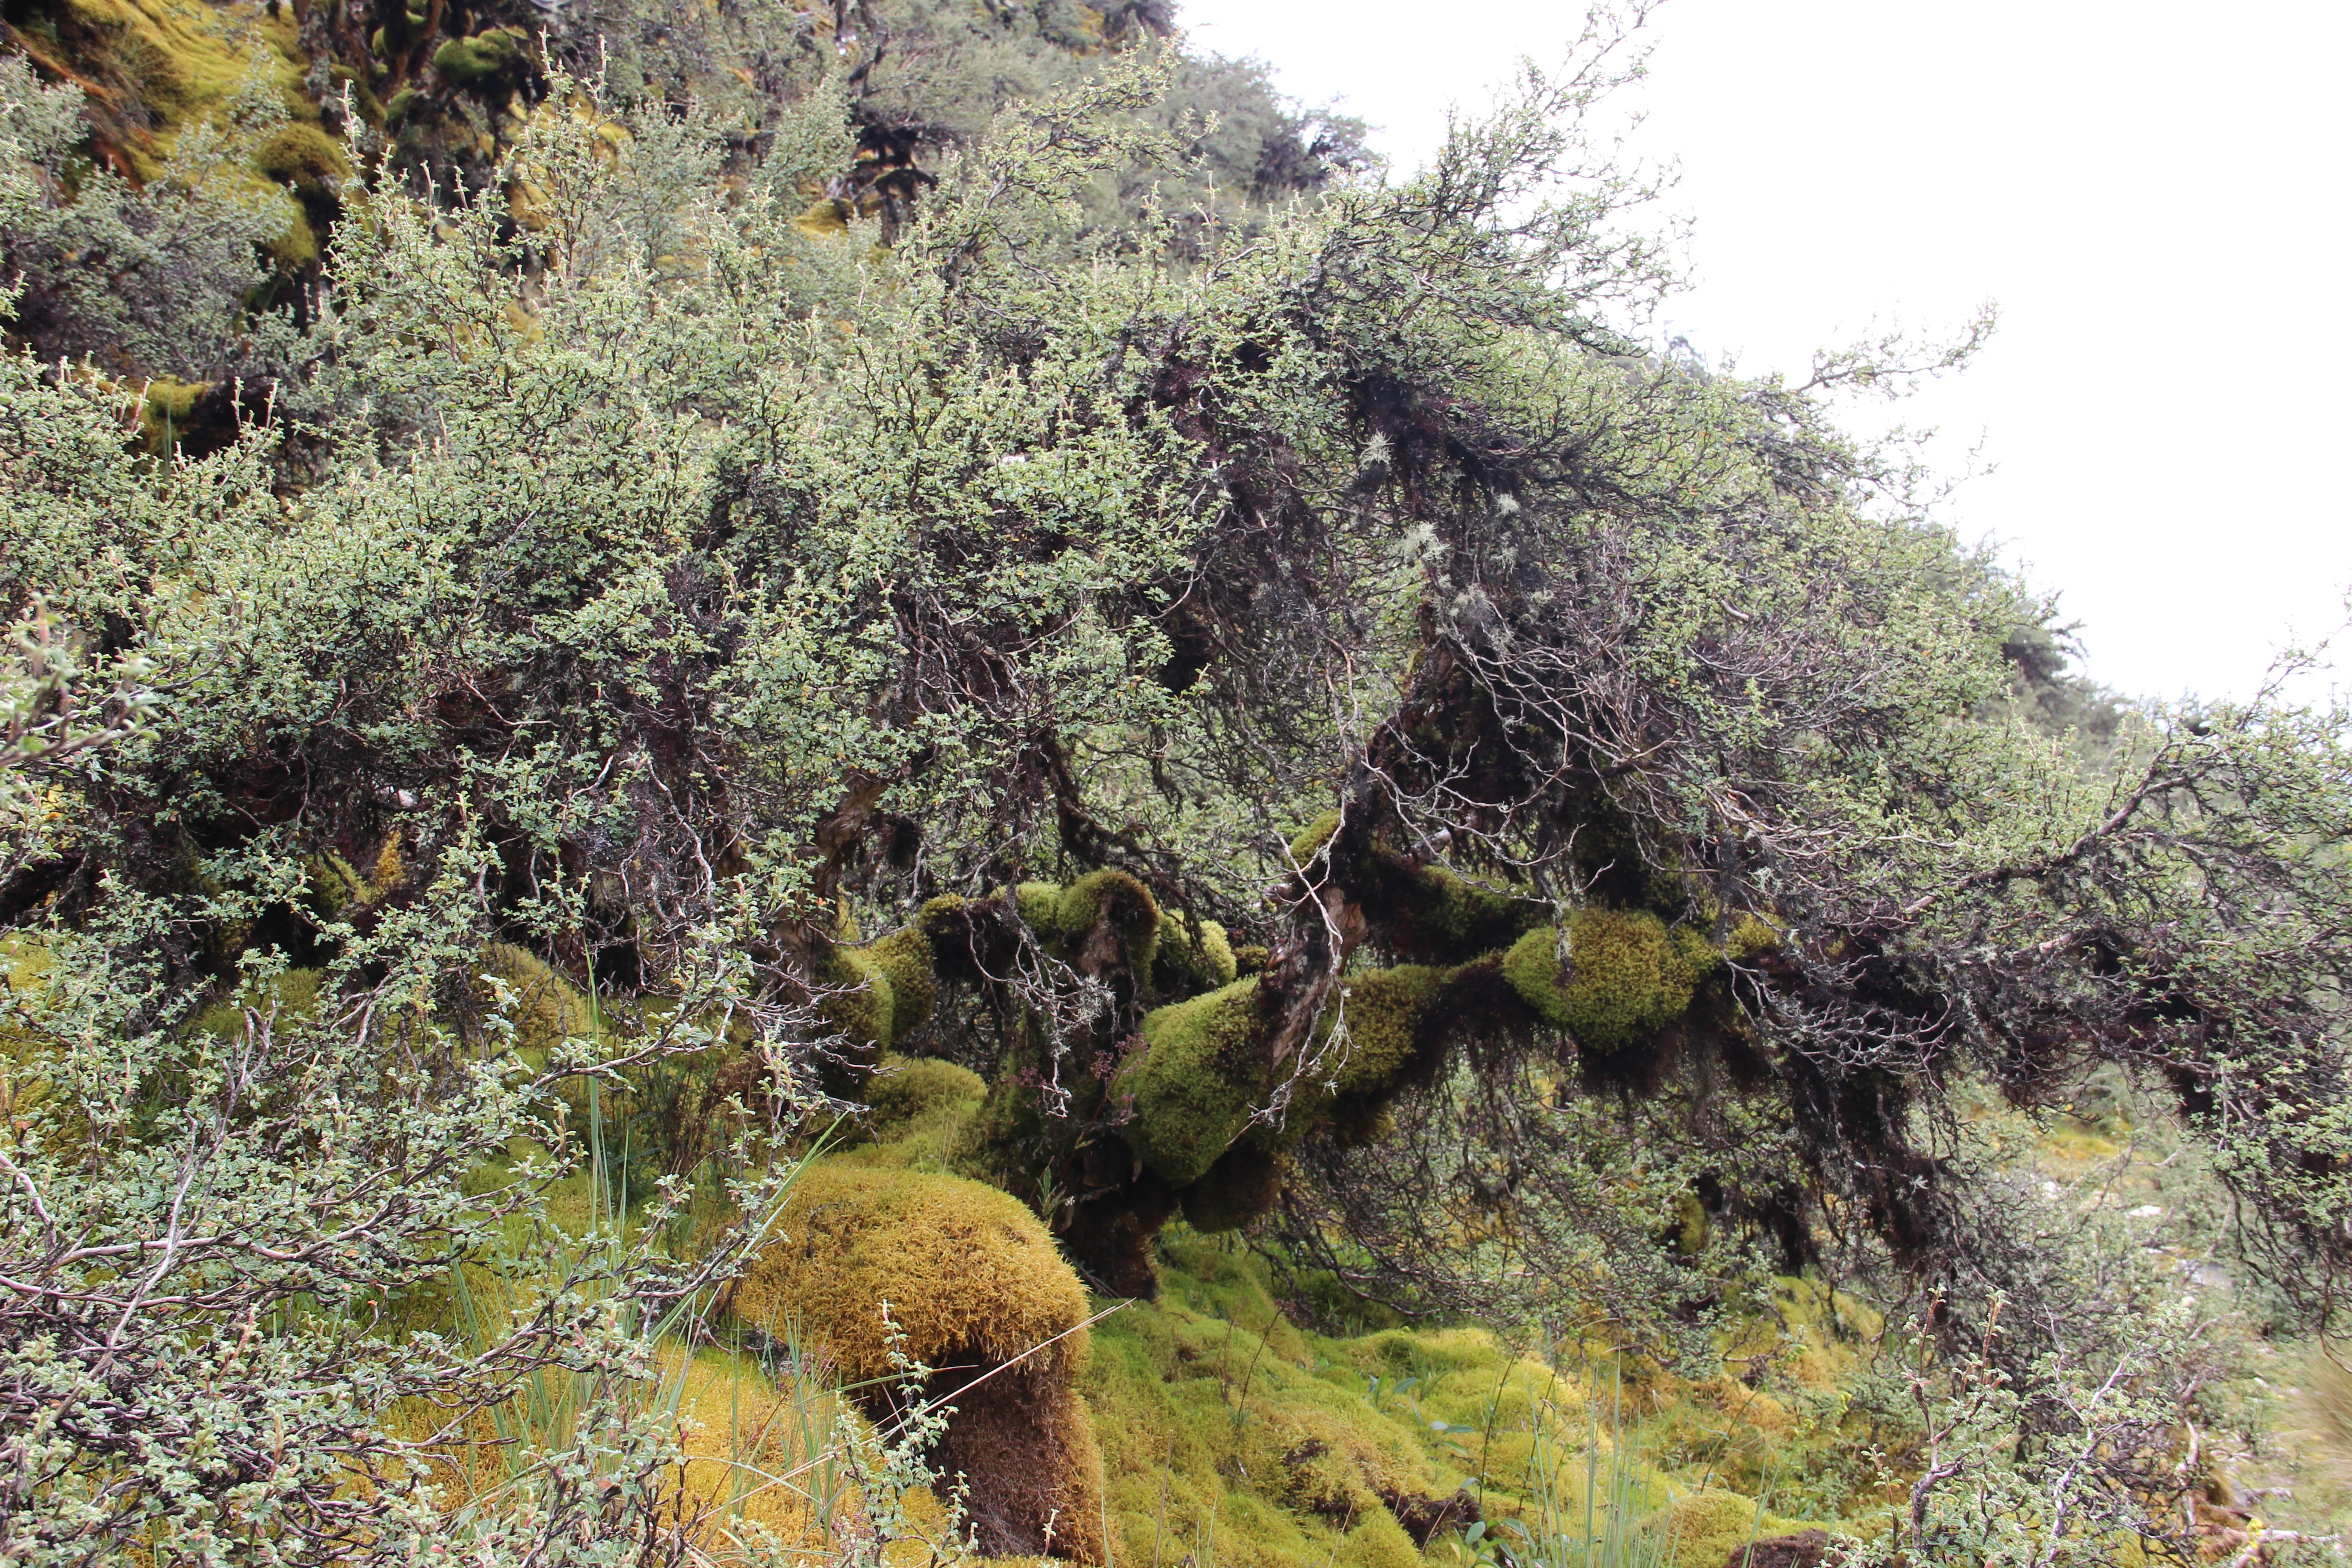 Image credit : Hajar Benelcadi, mundialis, project HERMOSA, Polylepis tree of the Peruvian Andes